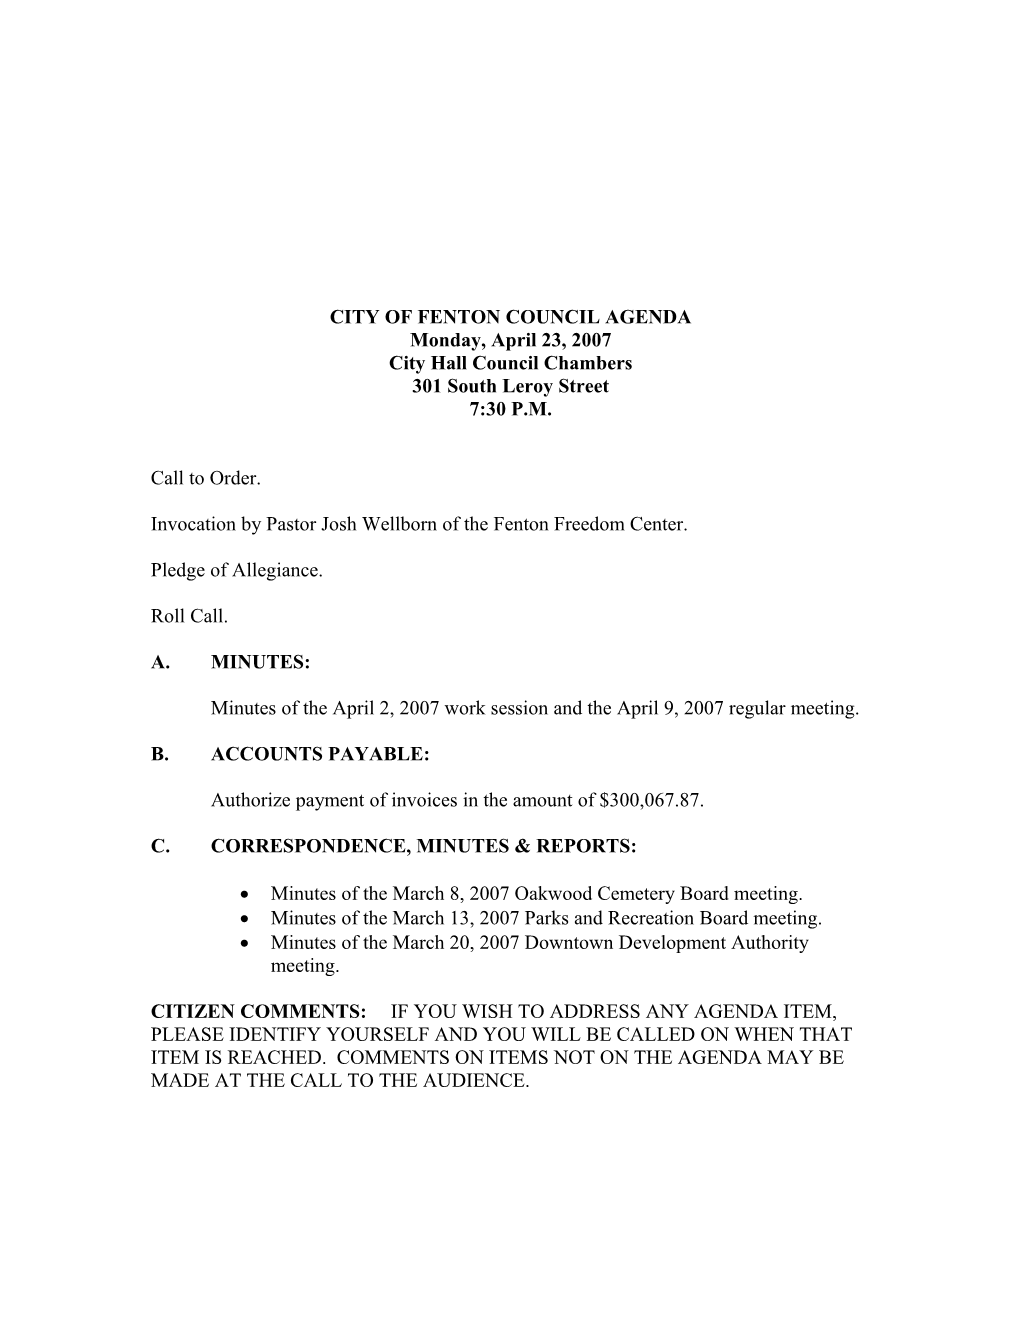 City of Fenton Council Agenda s1